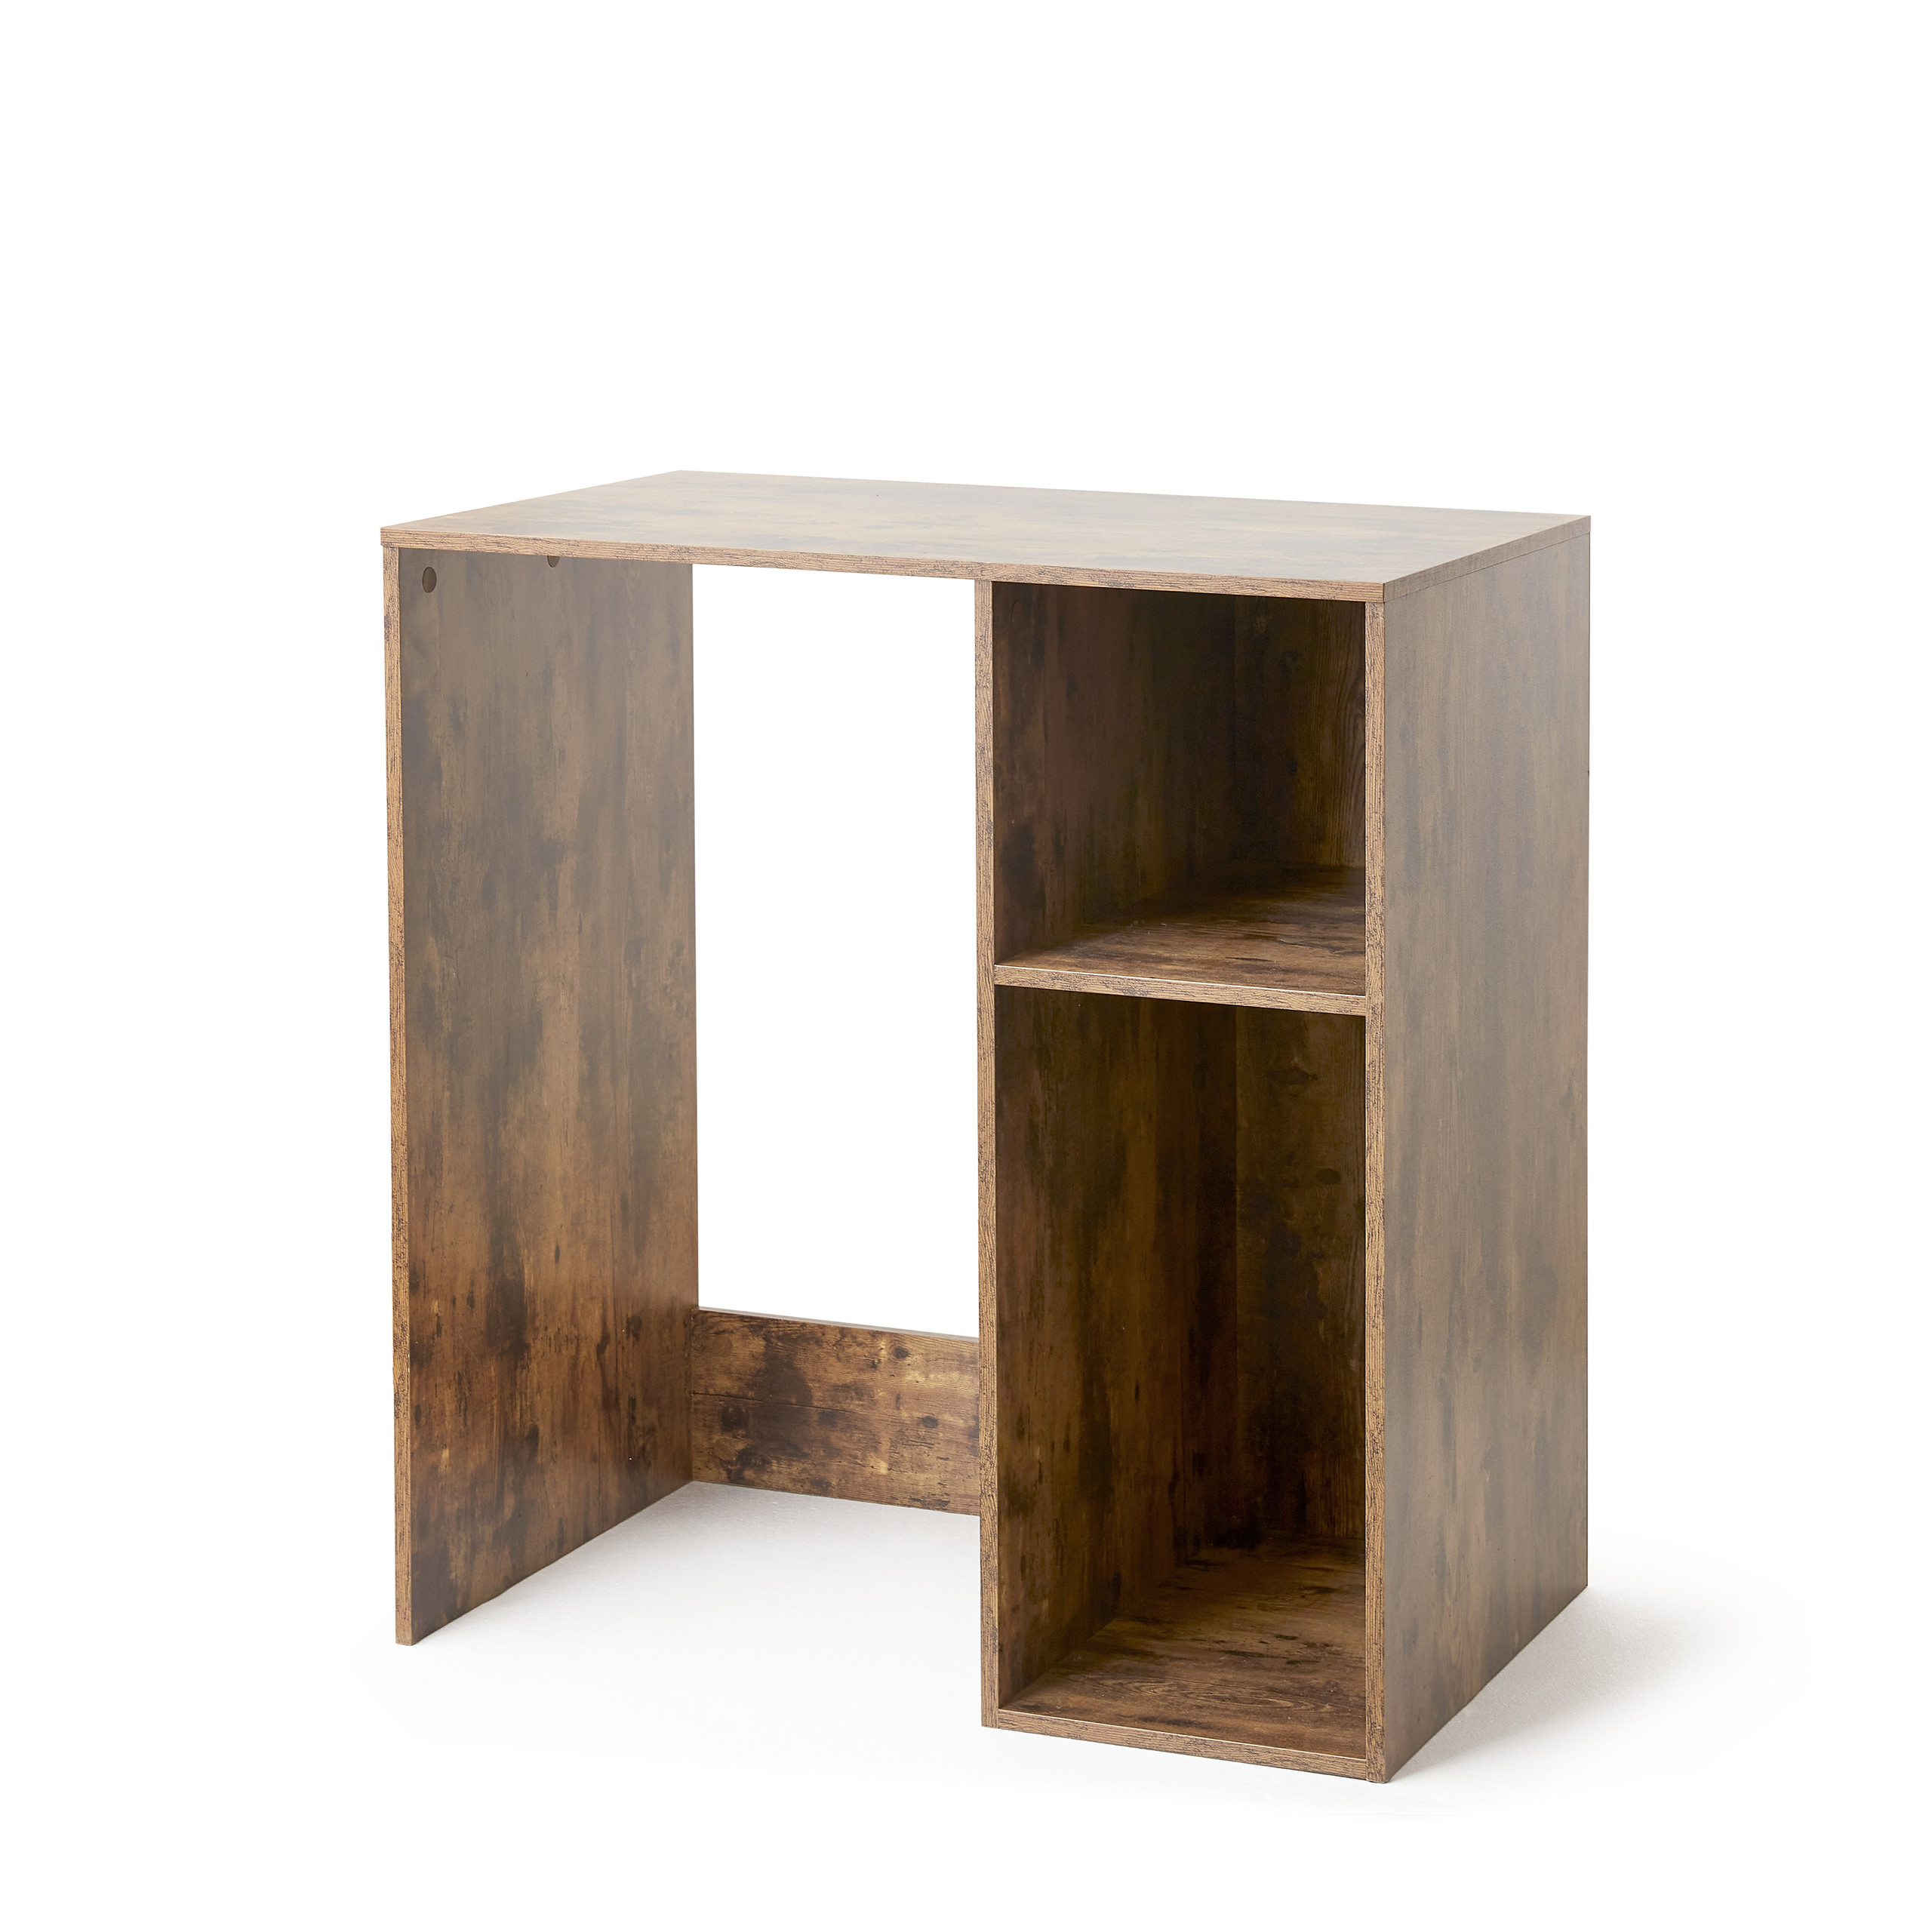 Mini Fridge Archives - ALL Wood Furniture